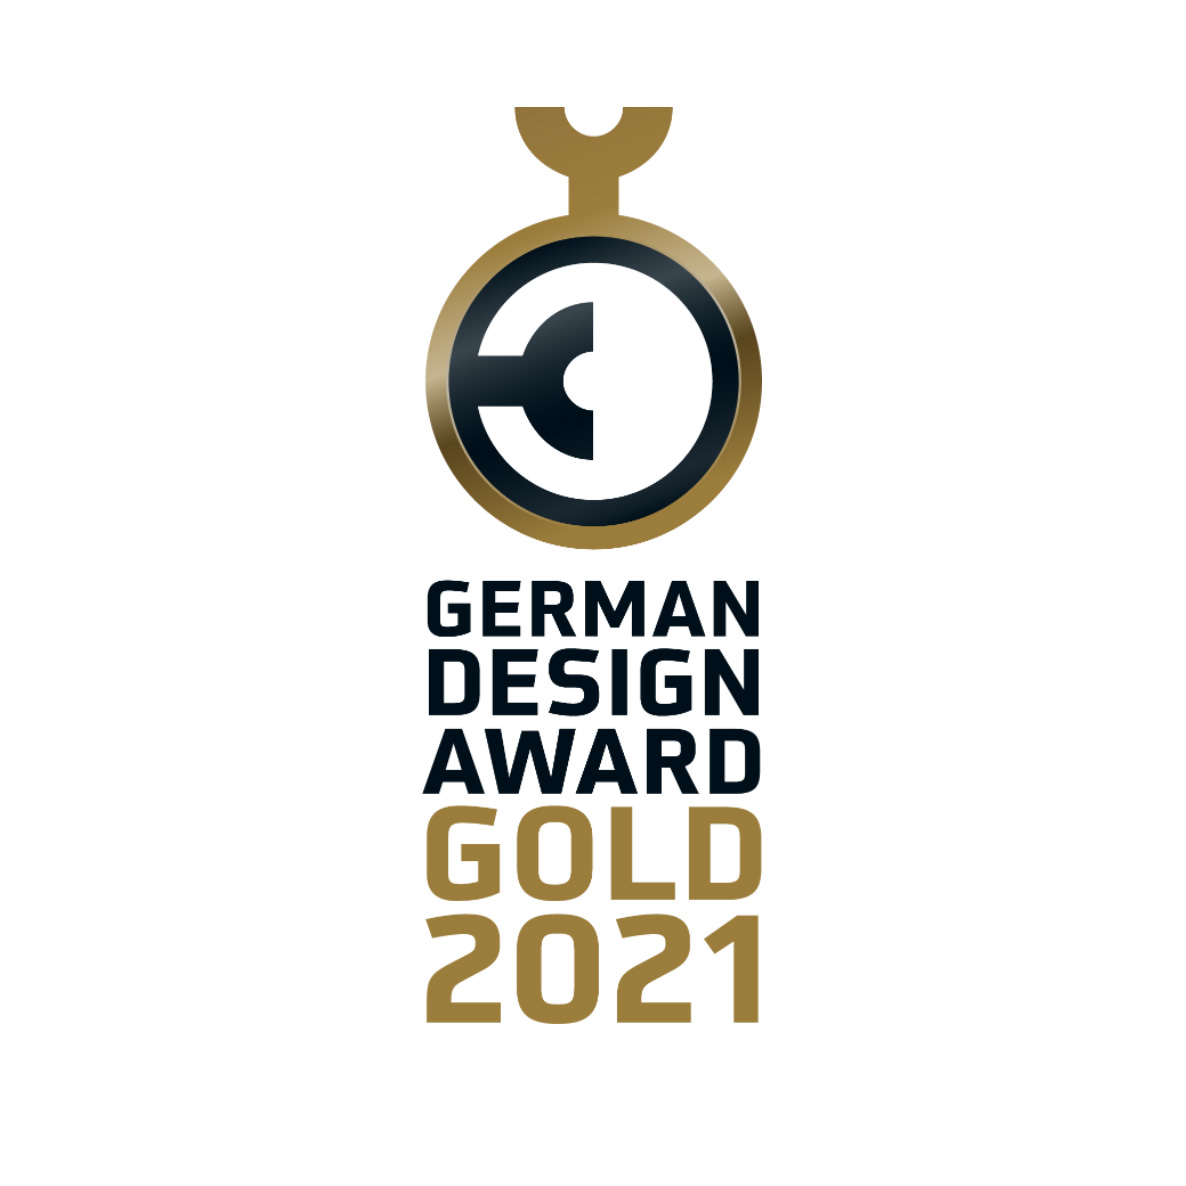 German Design Award Gold 2021 Logo